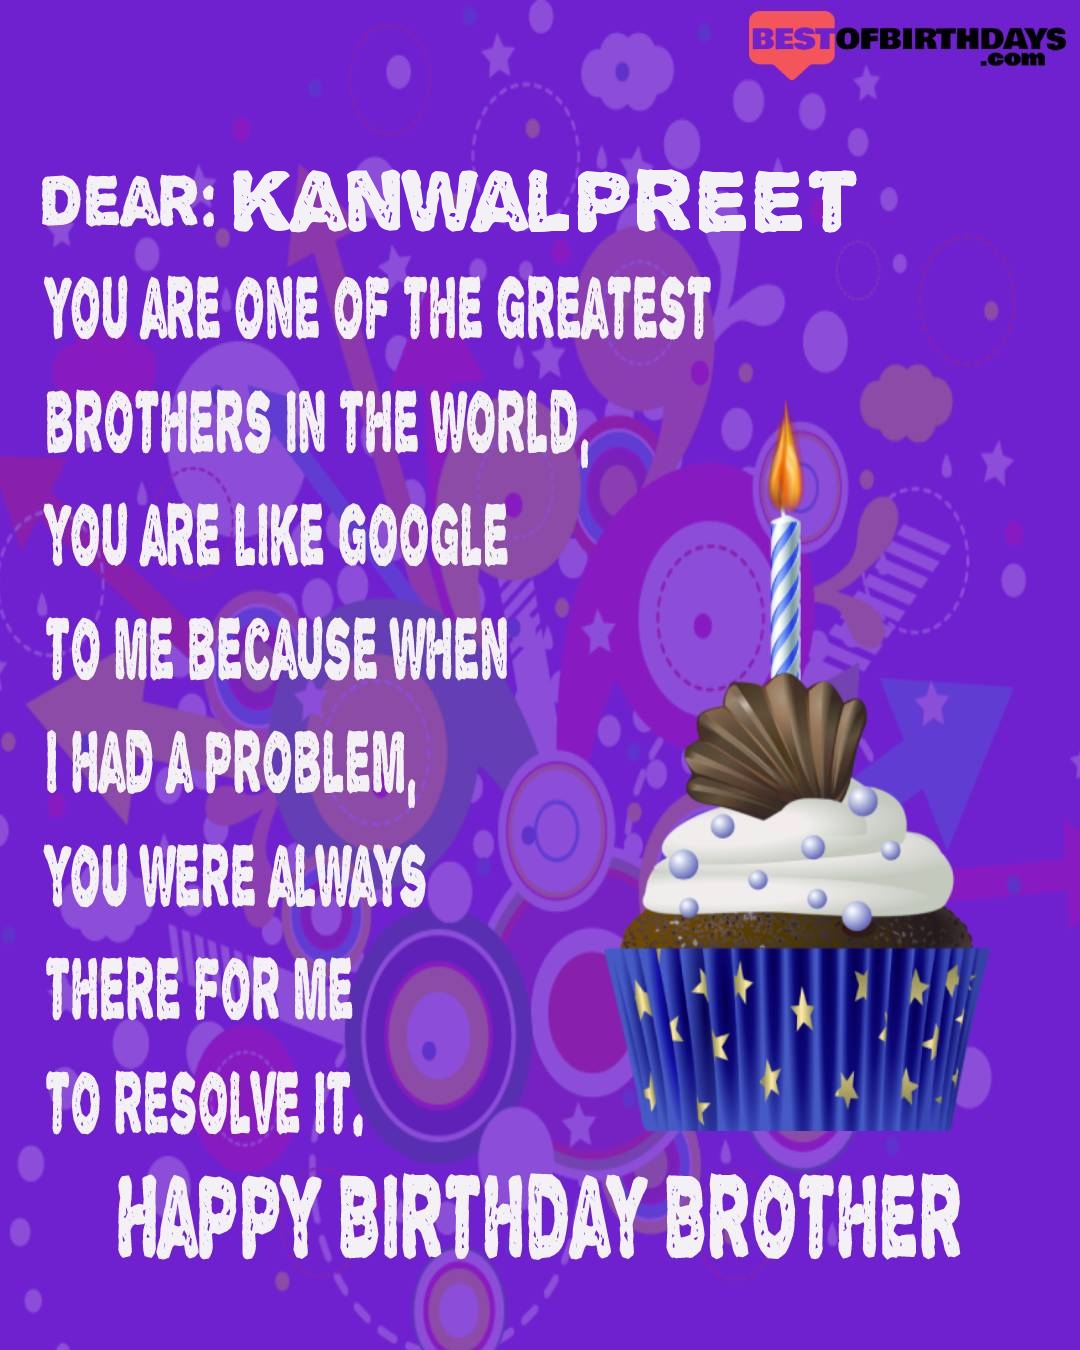 Happy birthday kanwalpreet bhai brother bro